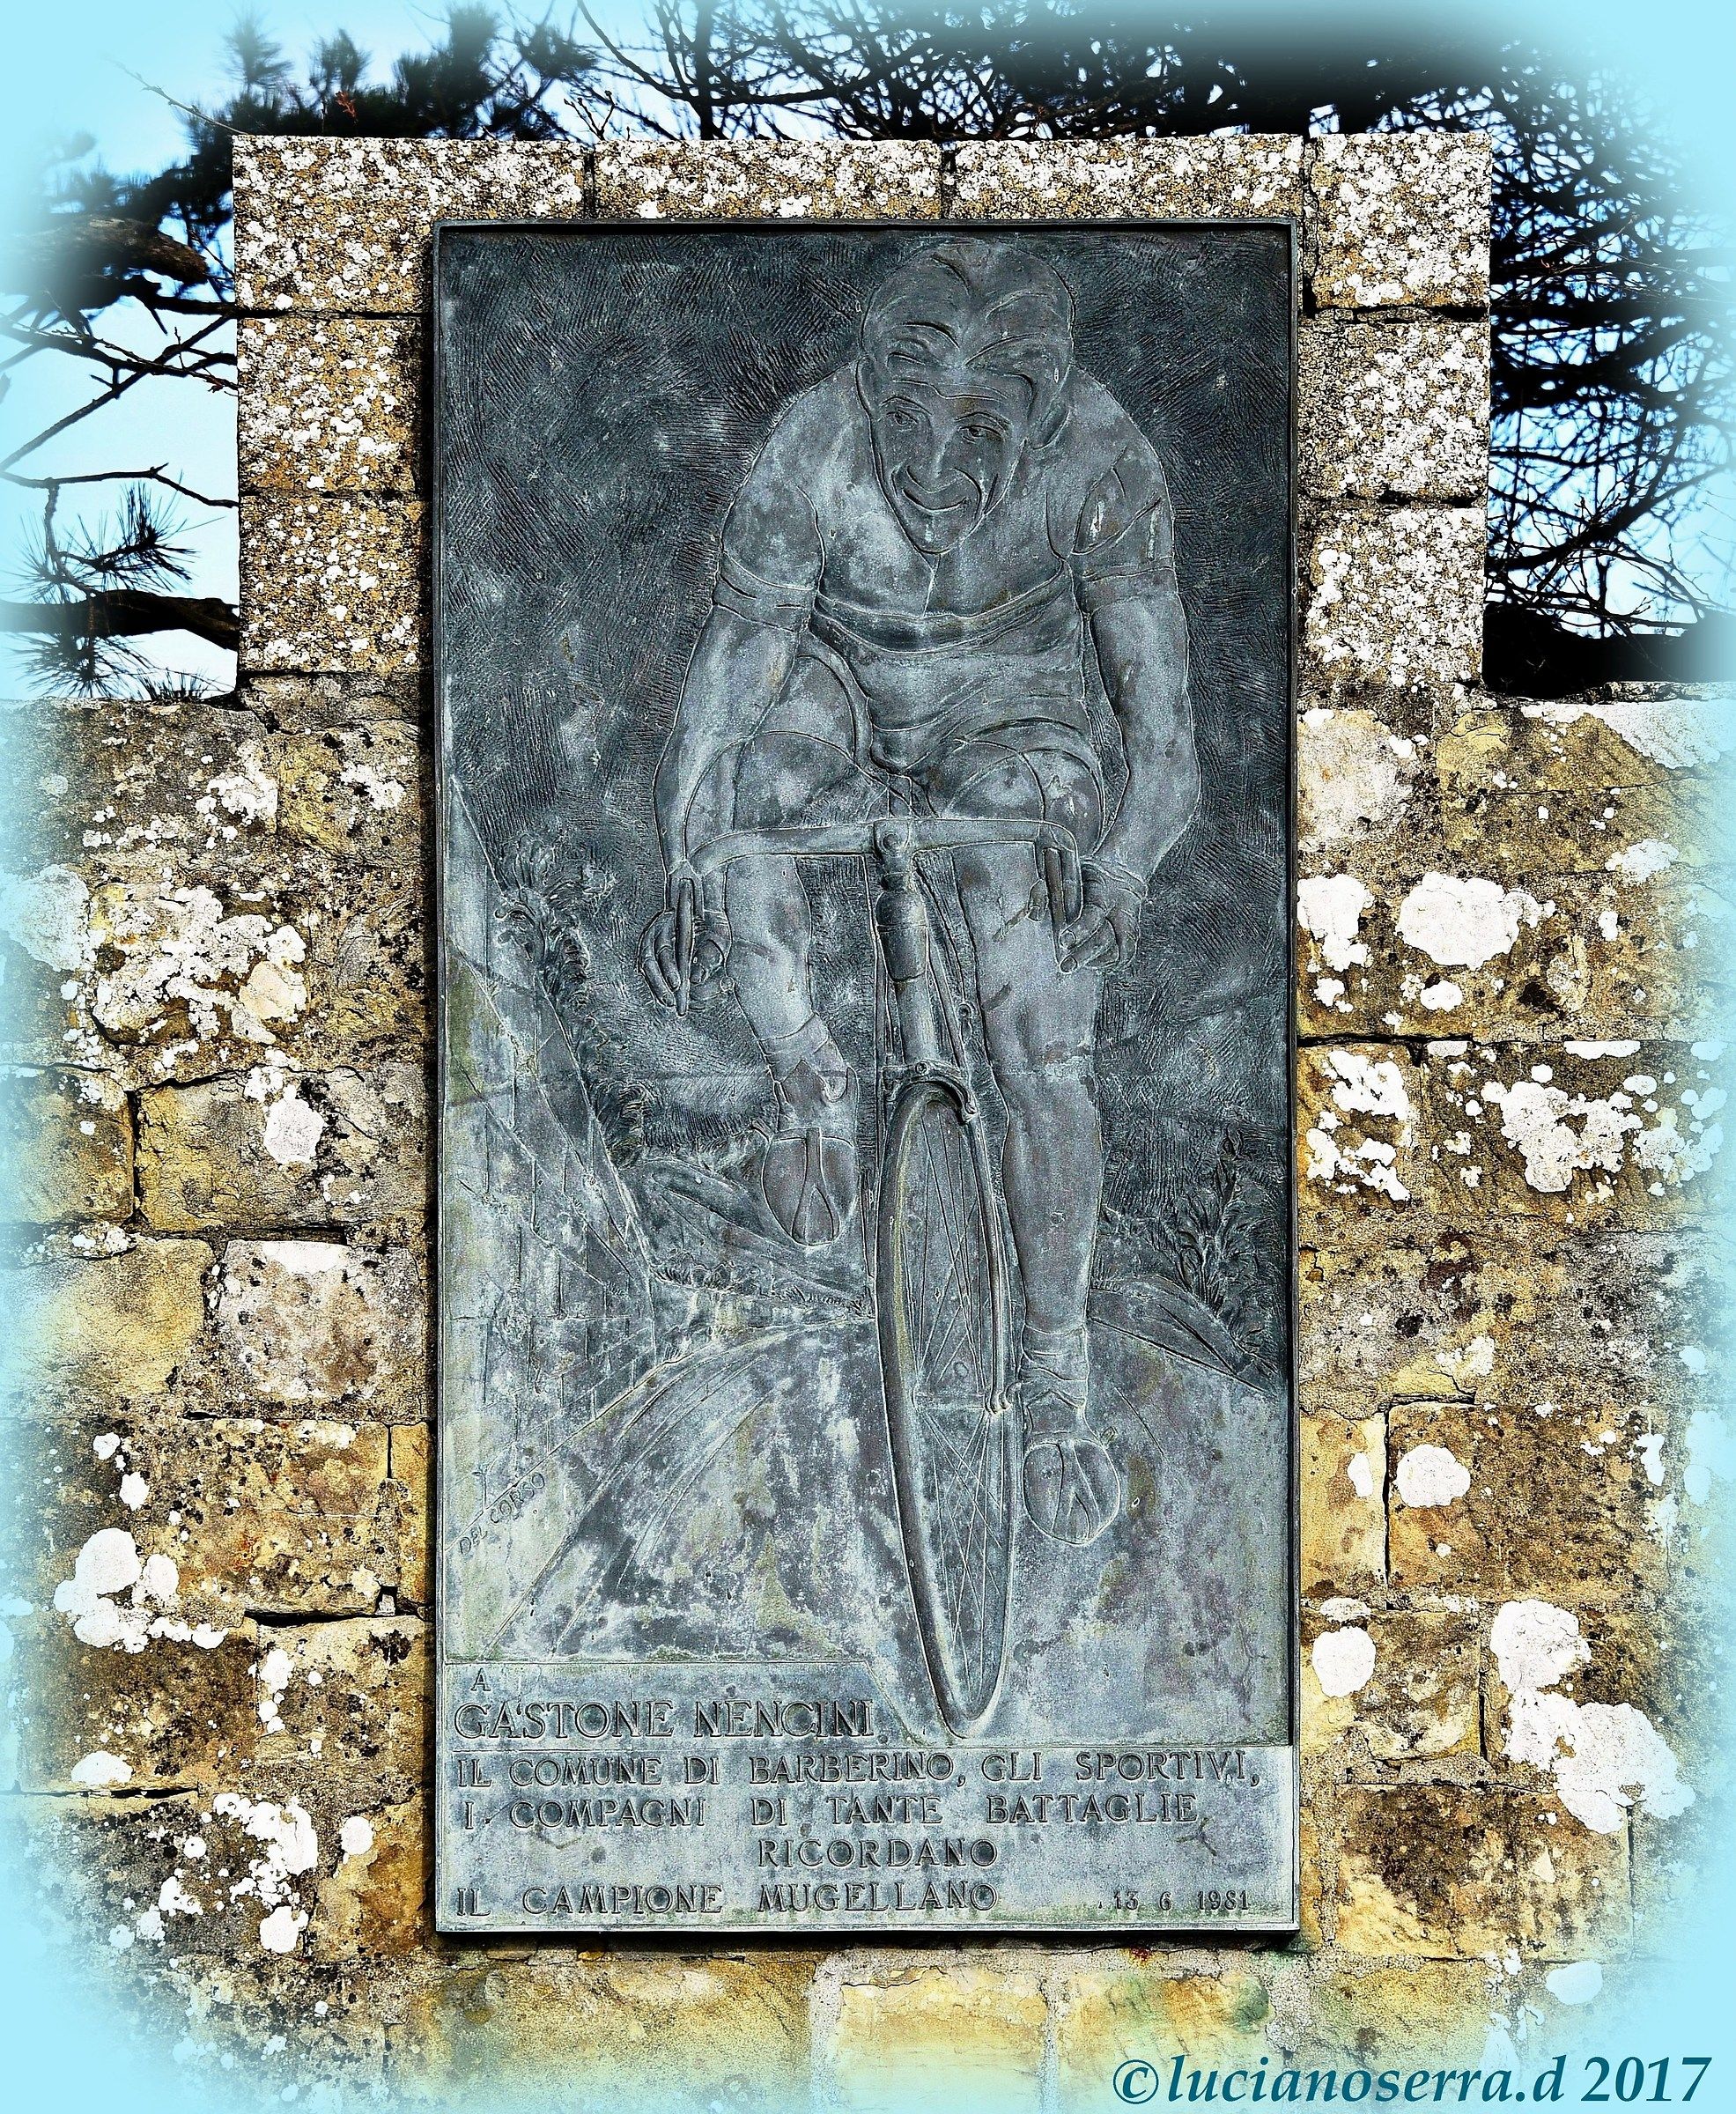 Memorial plaque of the cyclist Gastone Nencini...